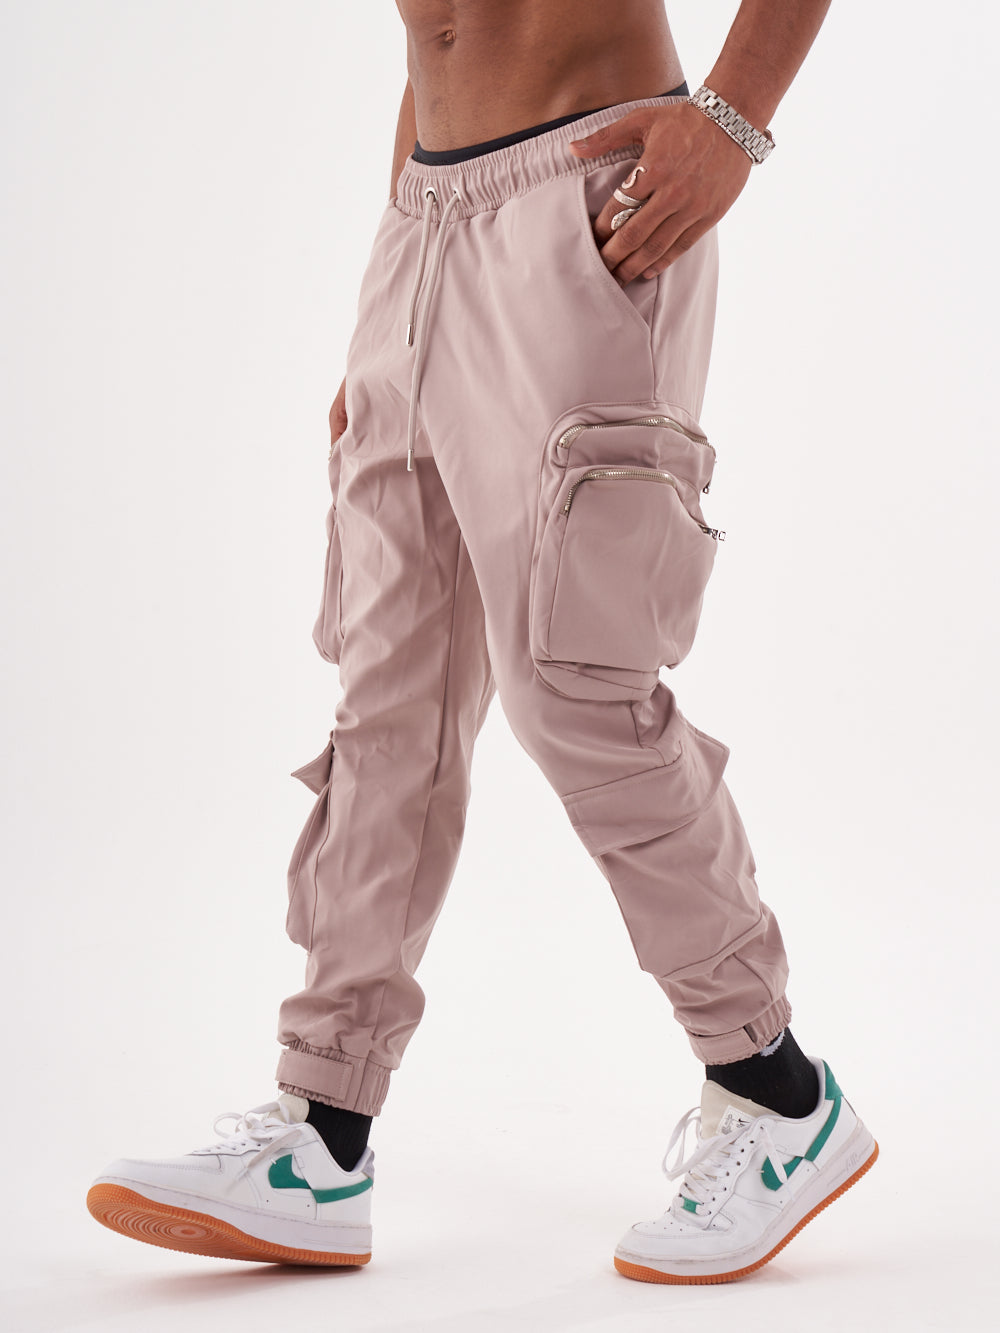 A man wearing Spunk Joggers | Mauve cargo jogger pants.